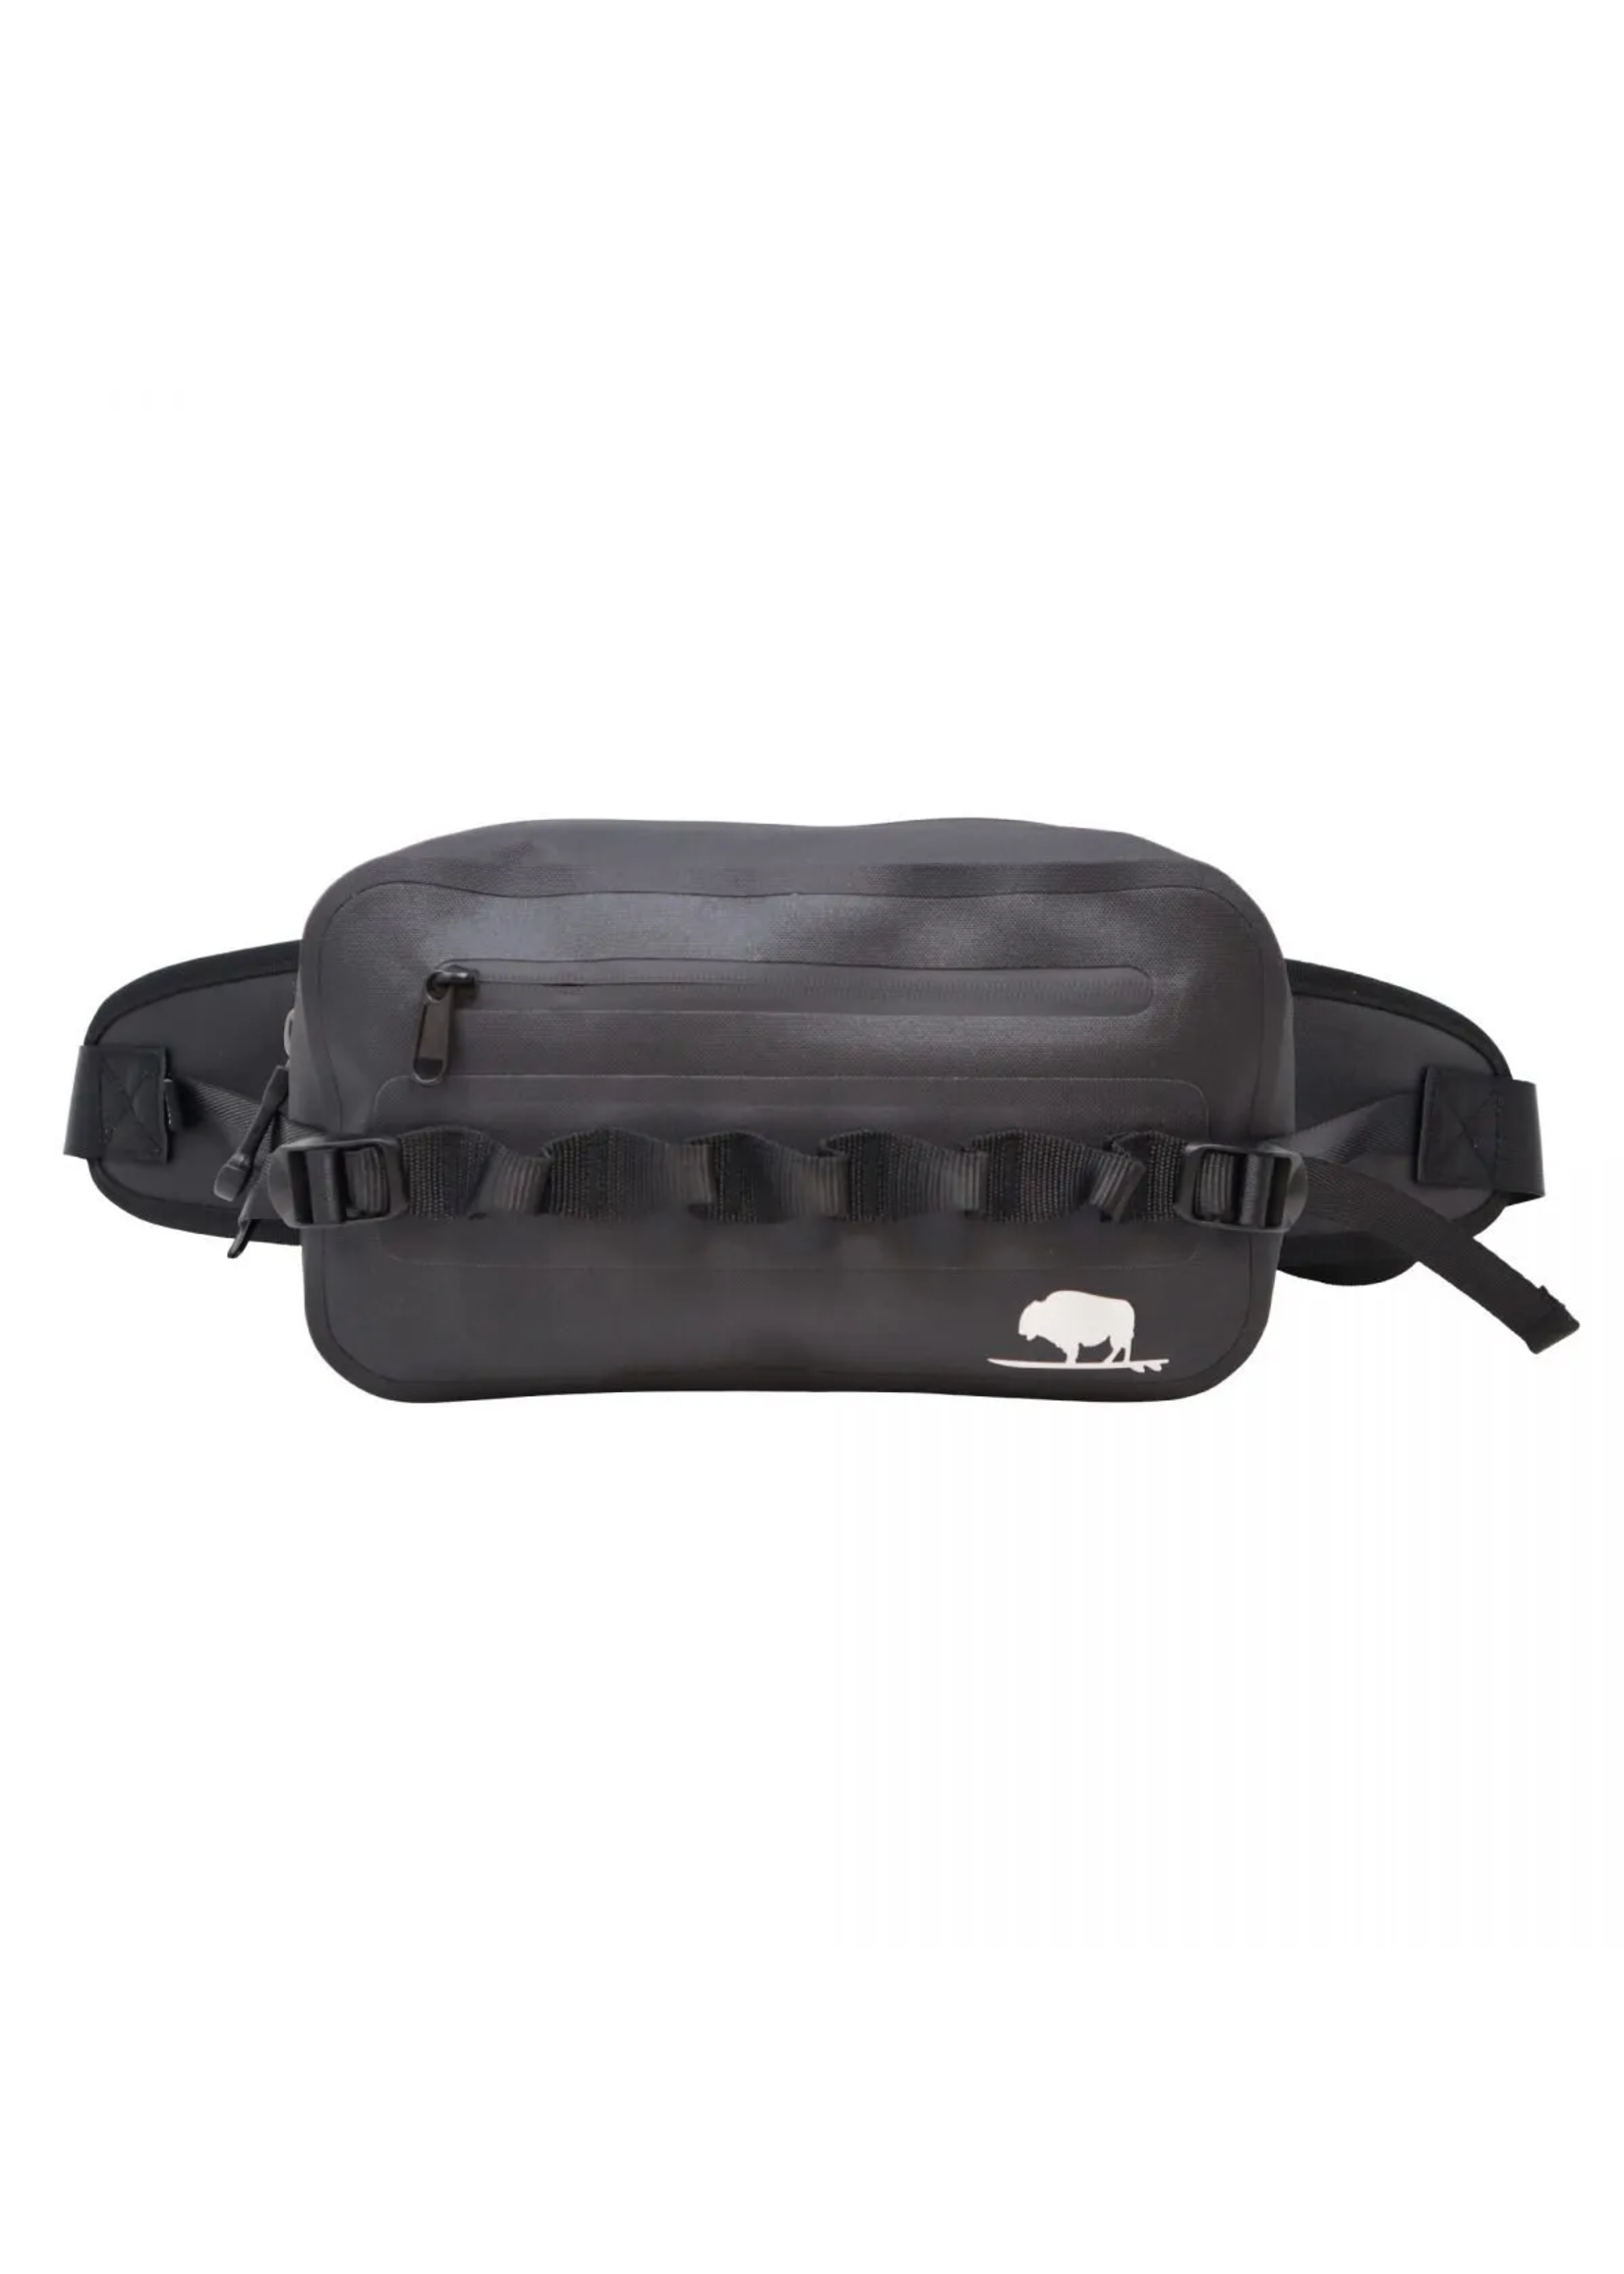 Atoll Overkill Dry Bag fanny pack - Black